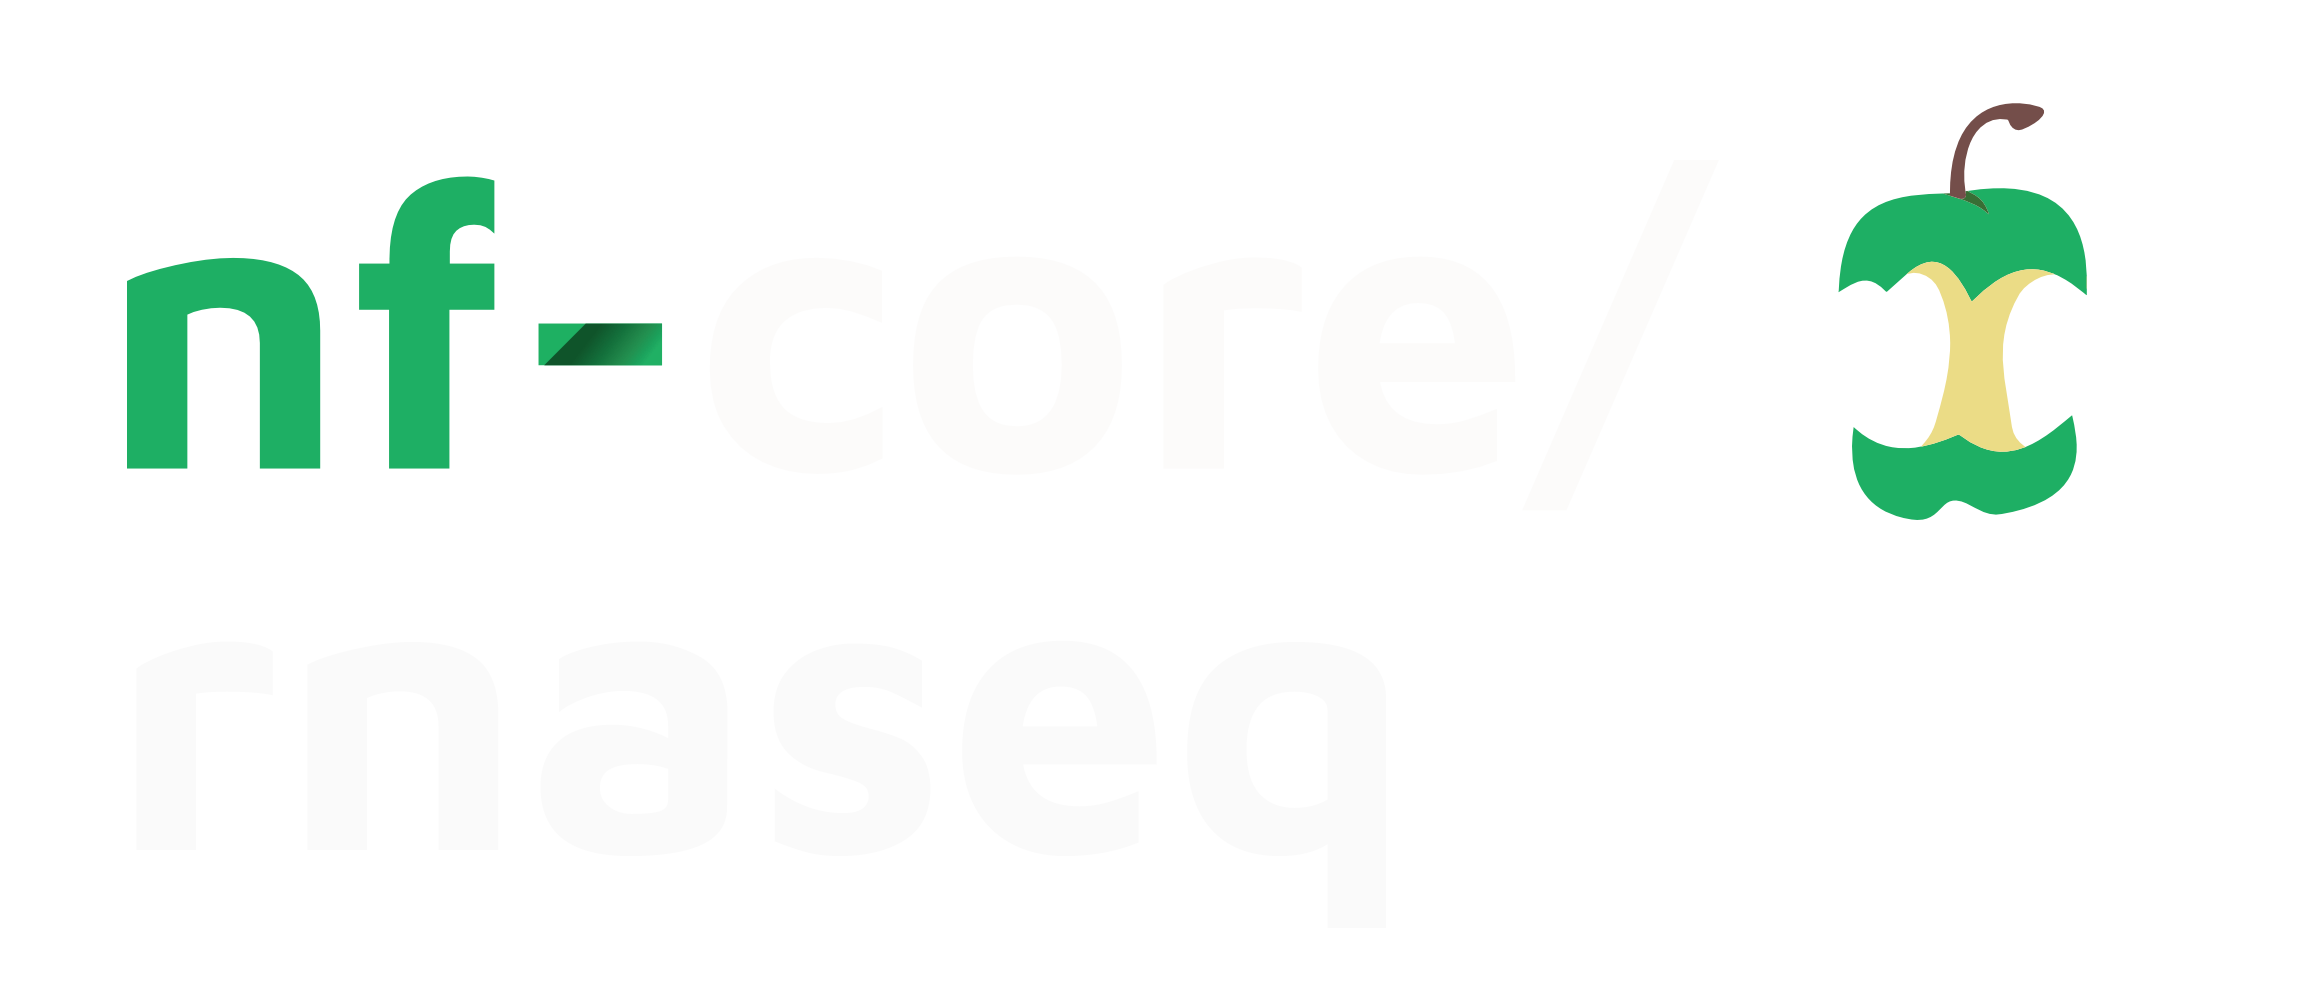 nf-core/rnaseq